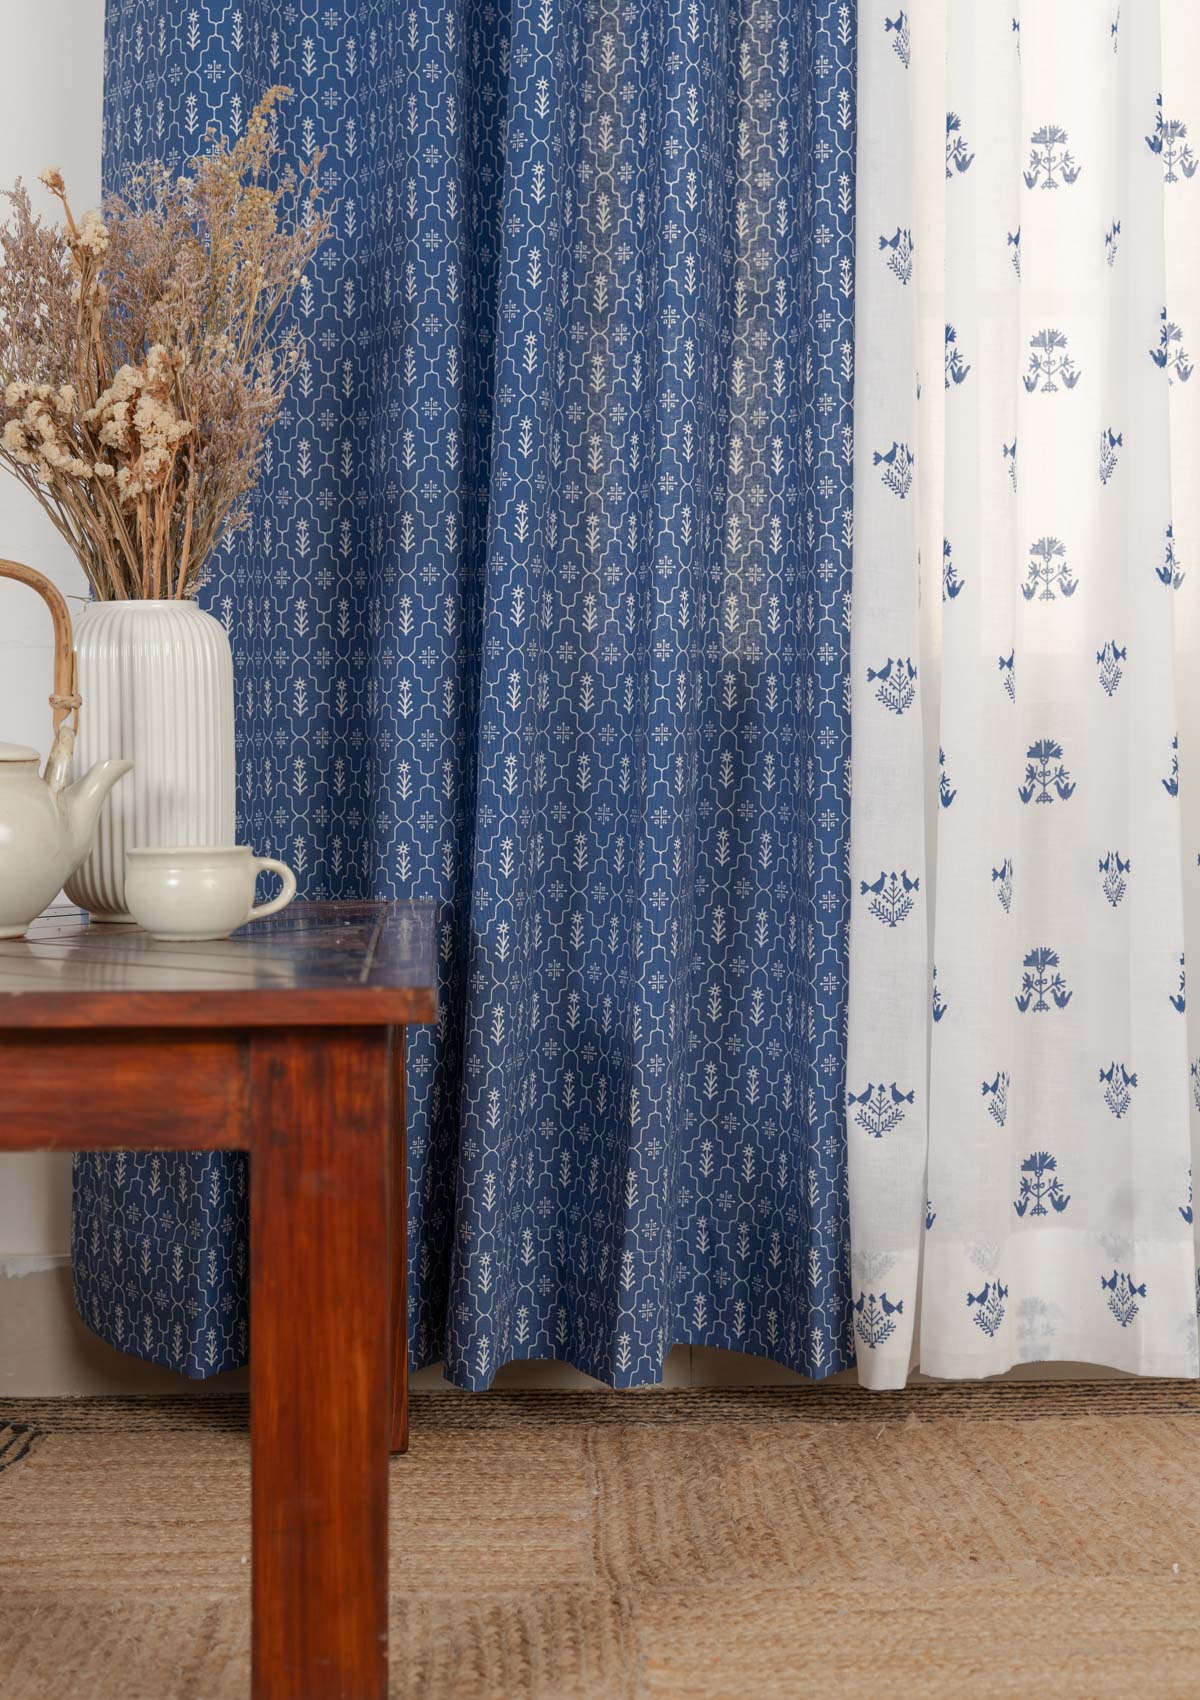 Meadow geometric cotton curtain with Sunbird geometric sheer 100% cotton curtains for living room - Set of 4